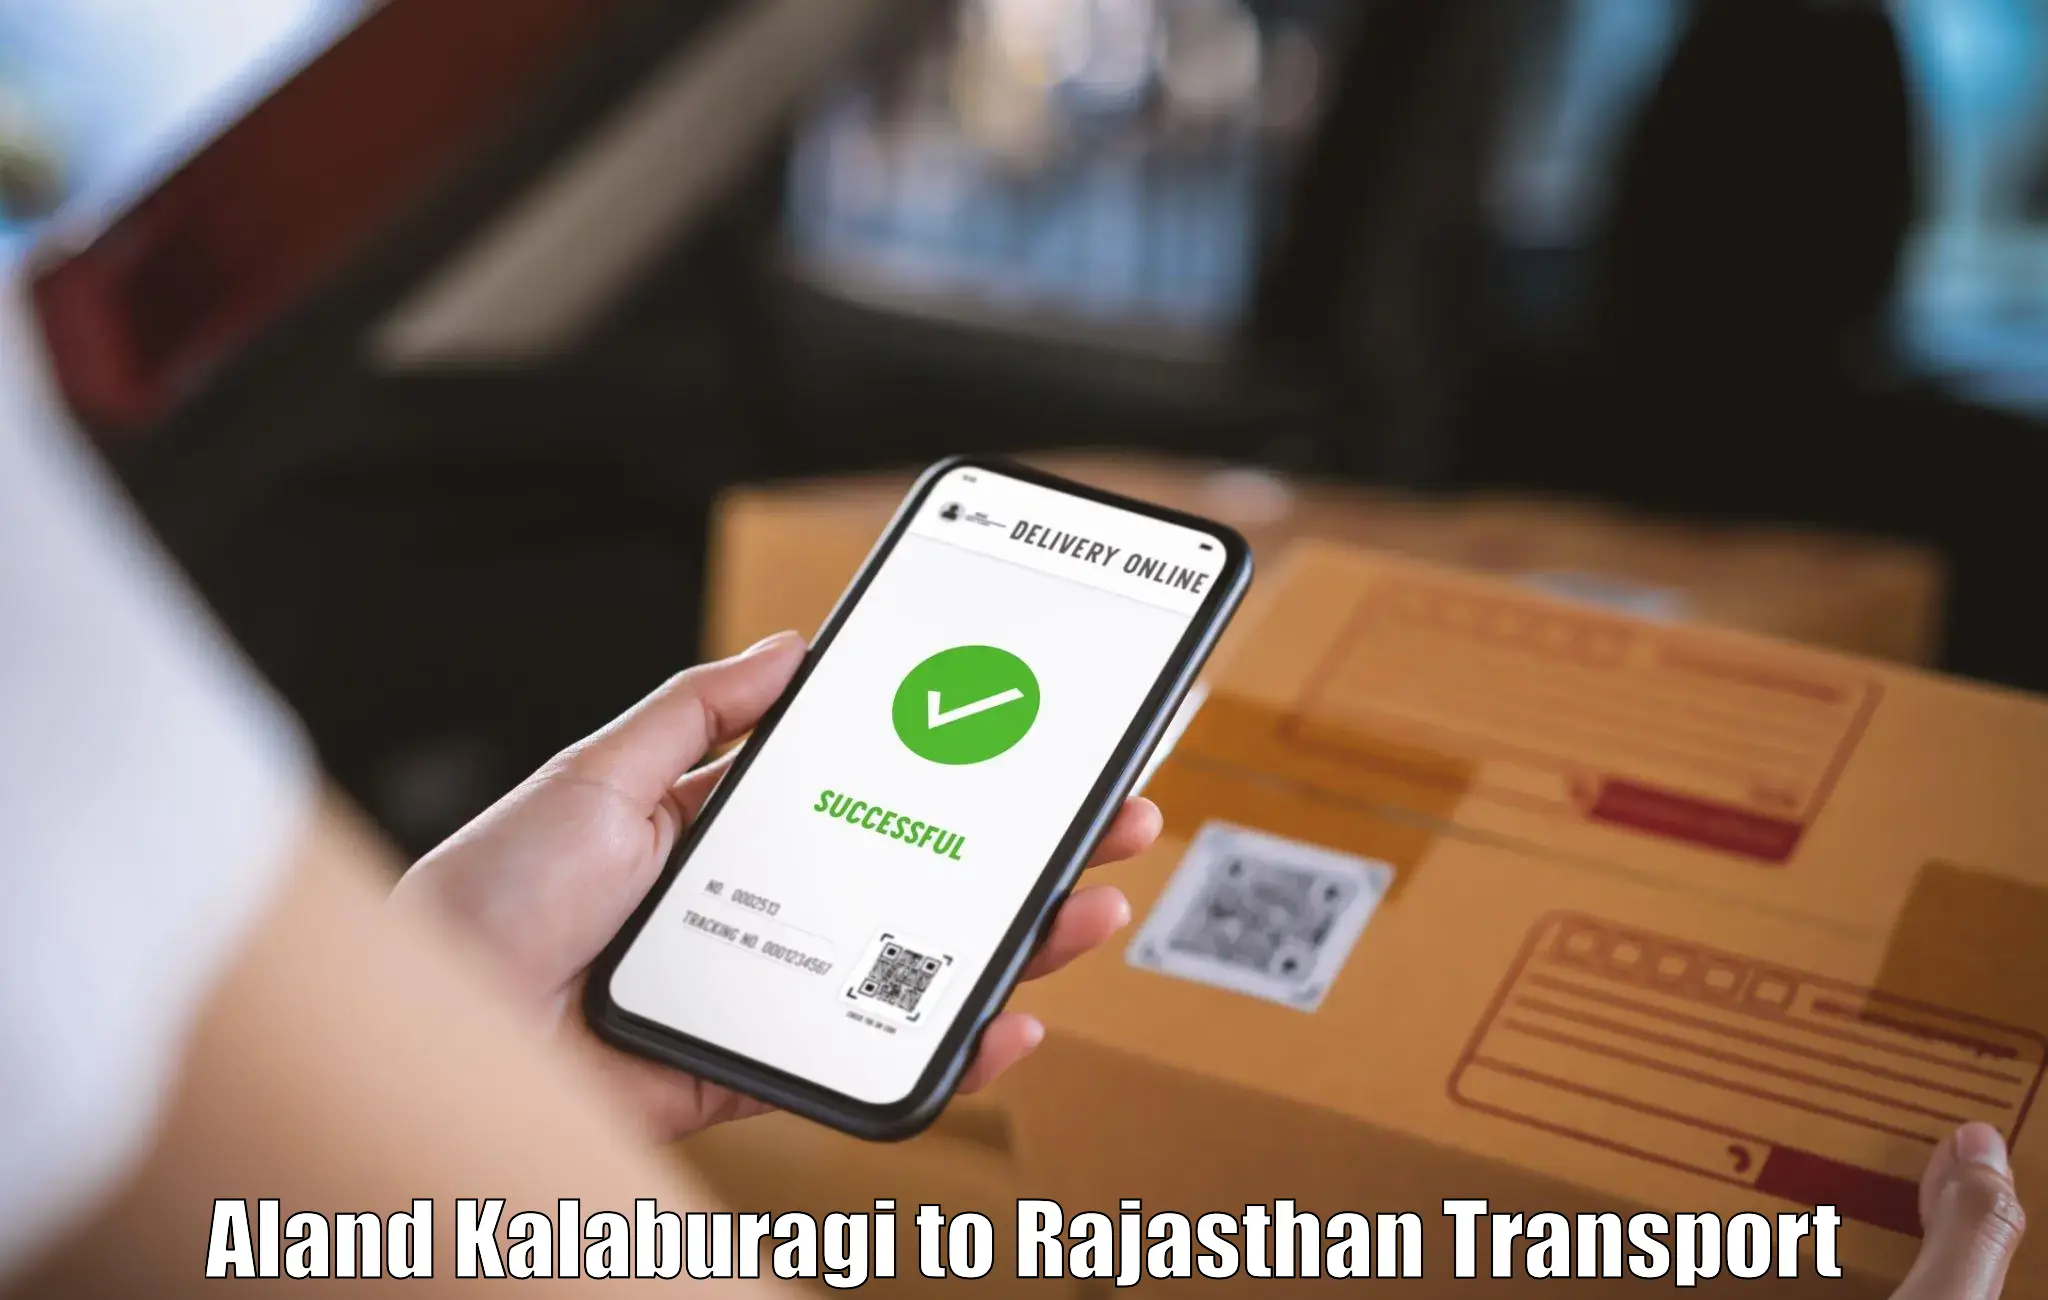 Goods delivery service Aland Kalaburagi to Rajasthan